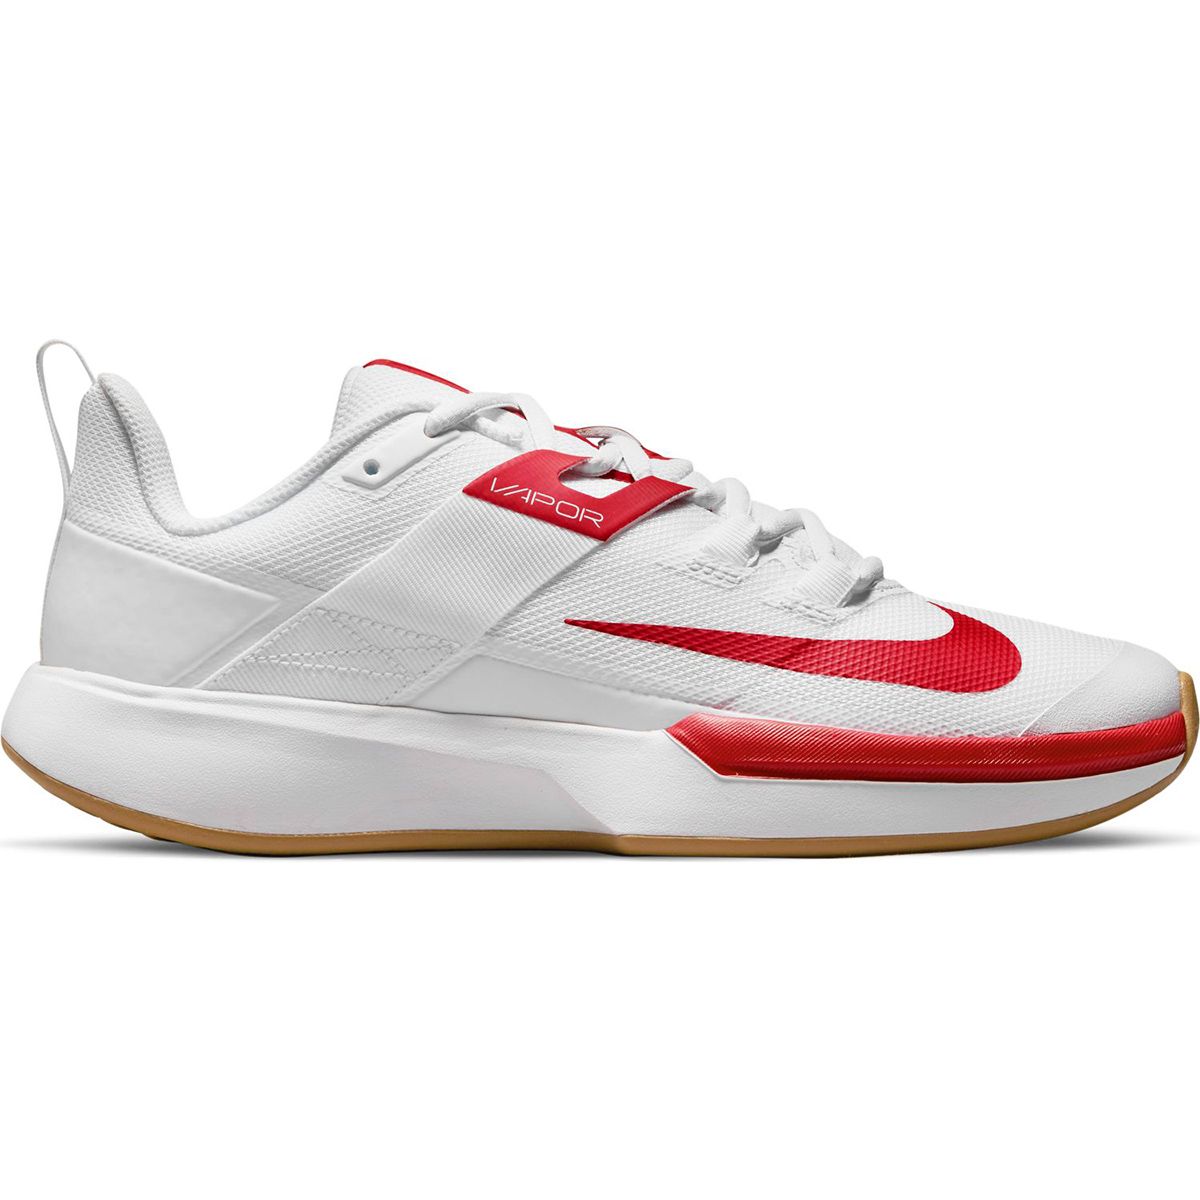 NikeCourt Vapor Lite Women's Tennis Shoes DC3431-188